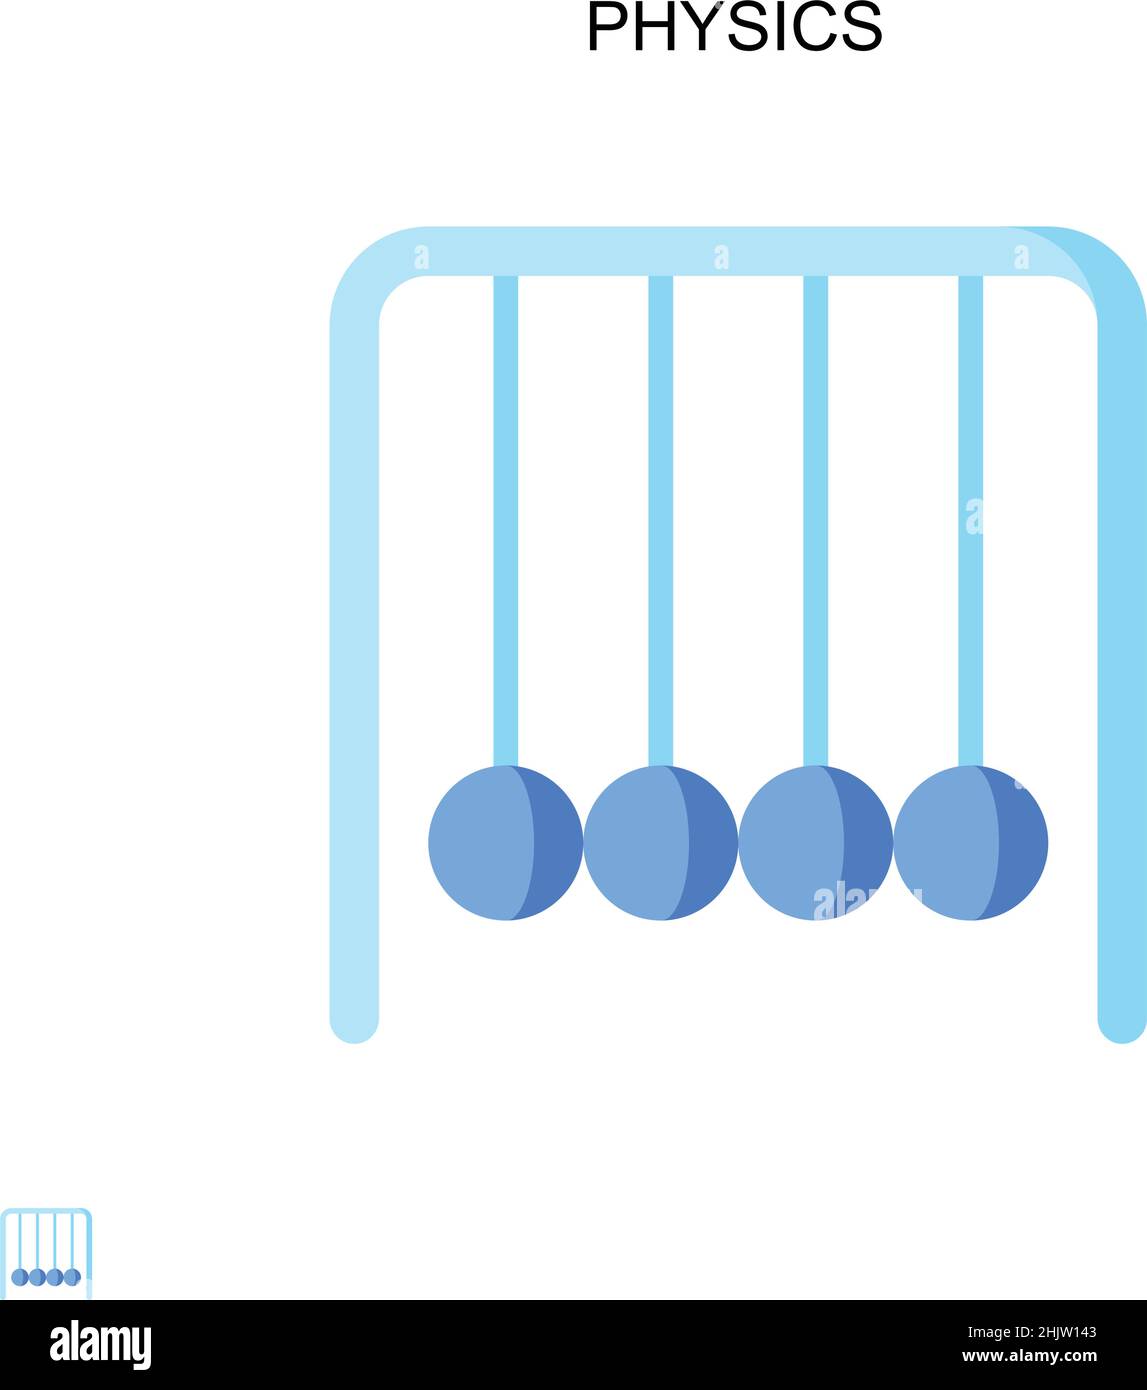 Einfaches Vektorsymbol Physik. Illustration Symbol Design-Vorlage für Web mobile UI-Element. Stock Vektor